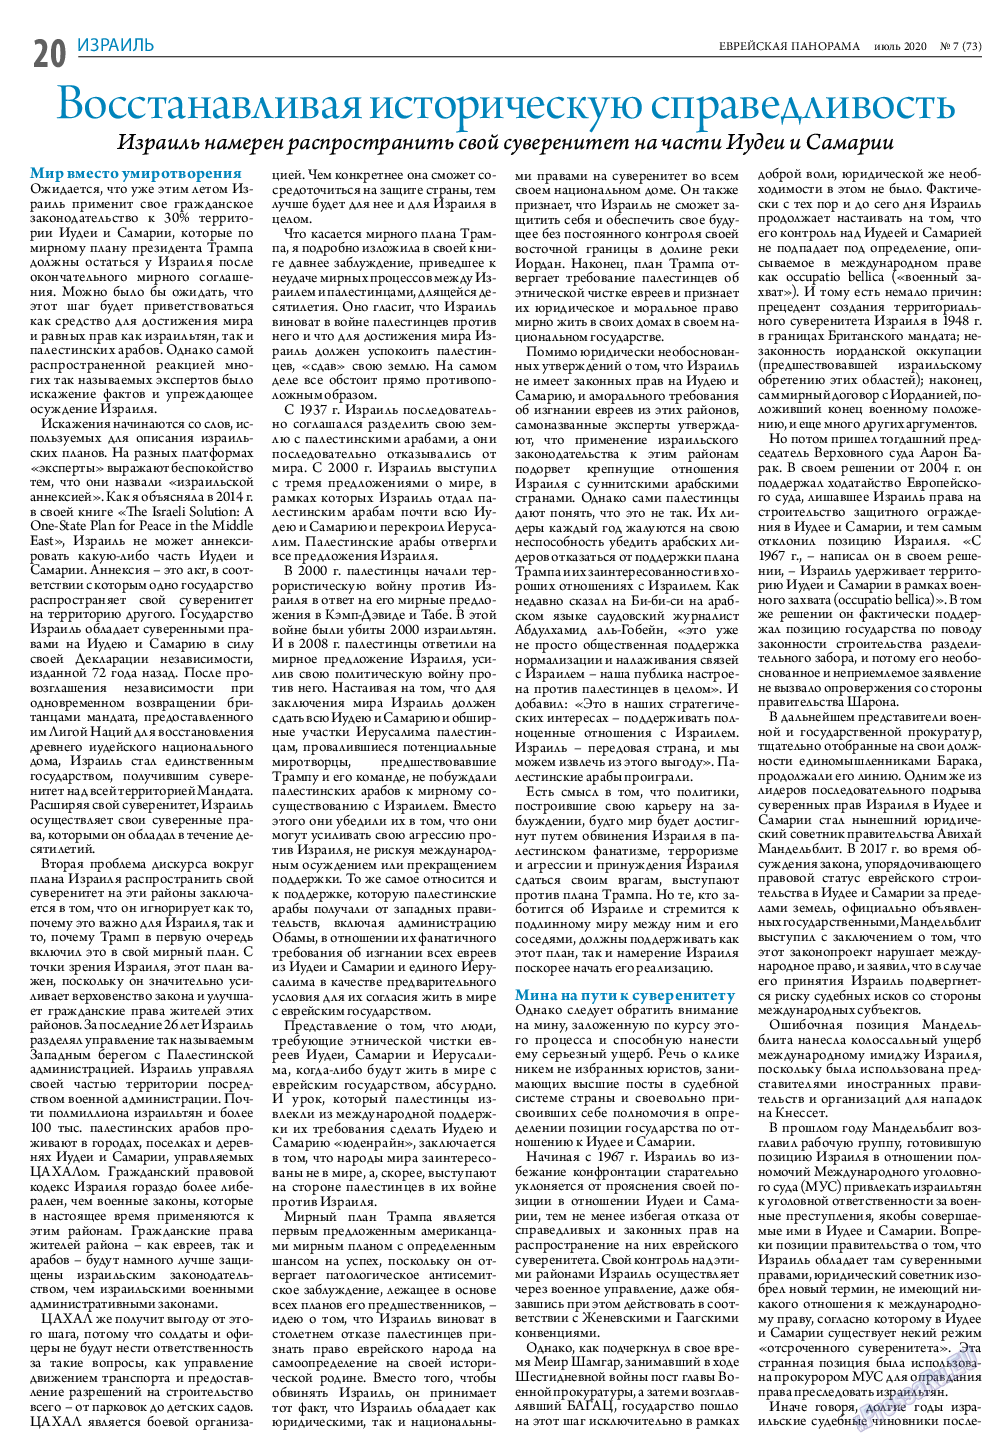 Еврейская панорама, газета. 2020 №7 стр.20